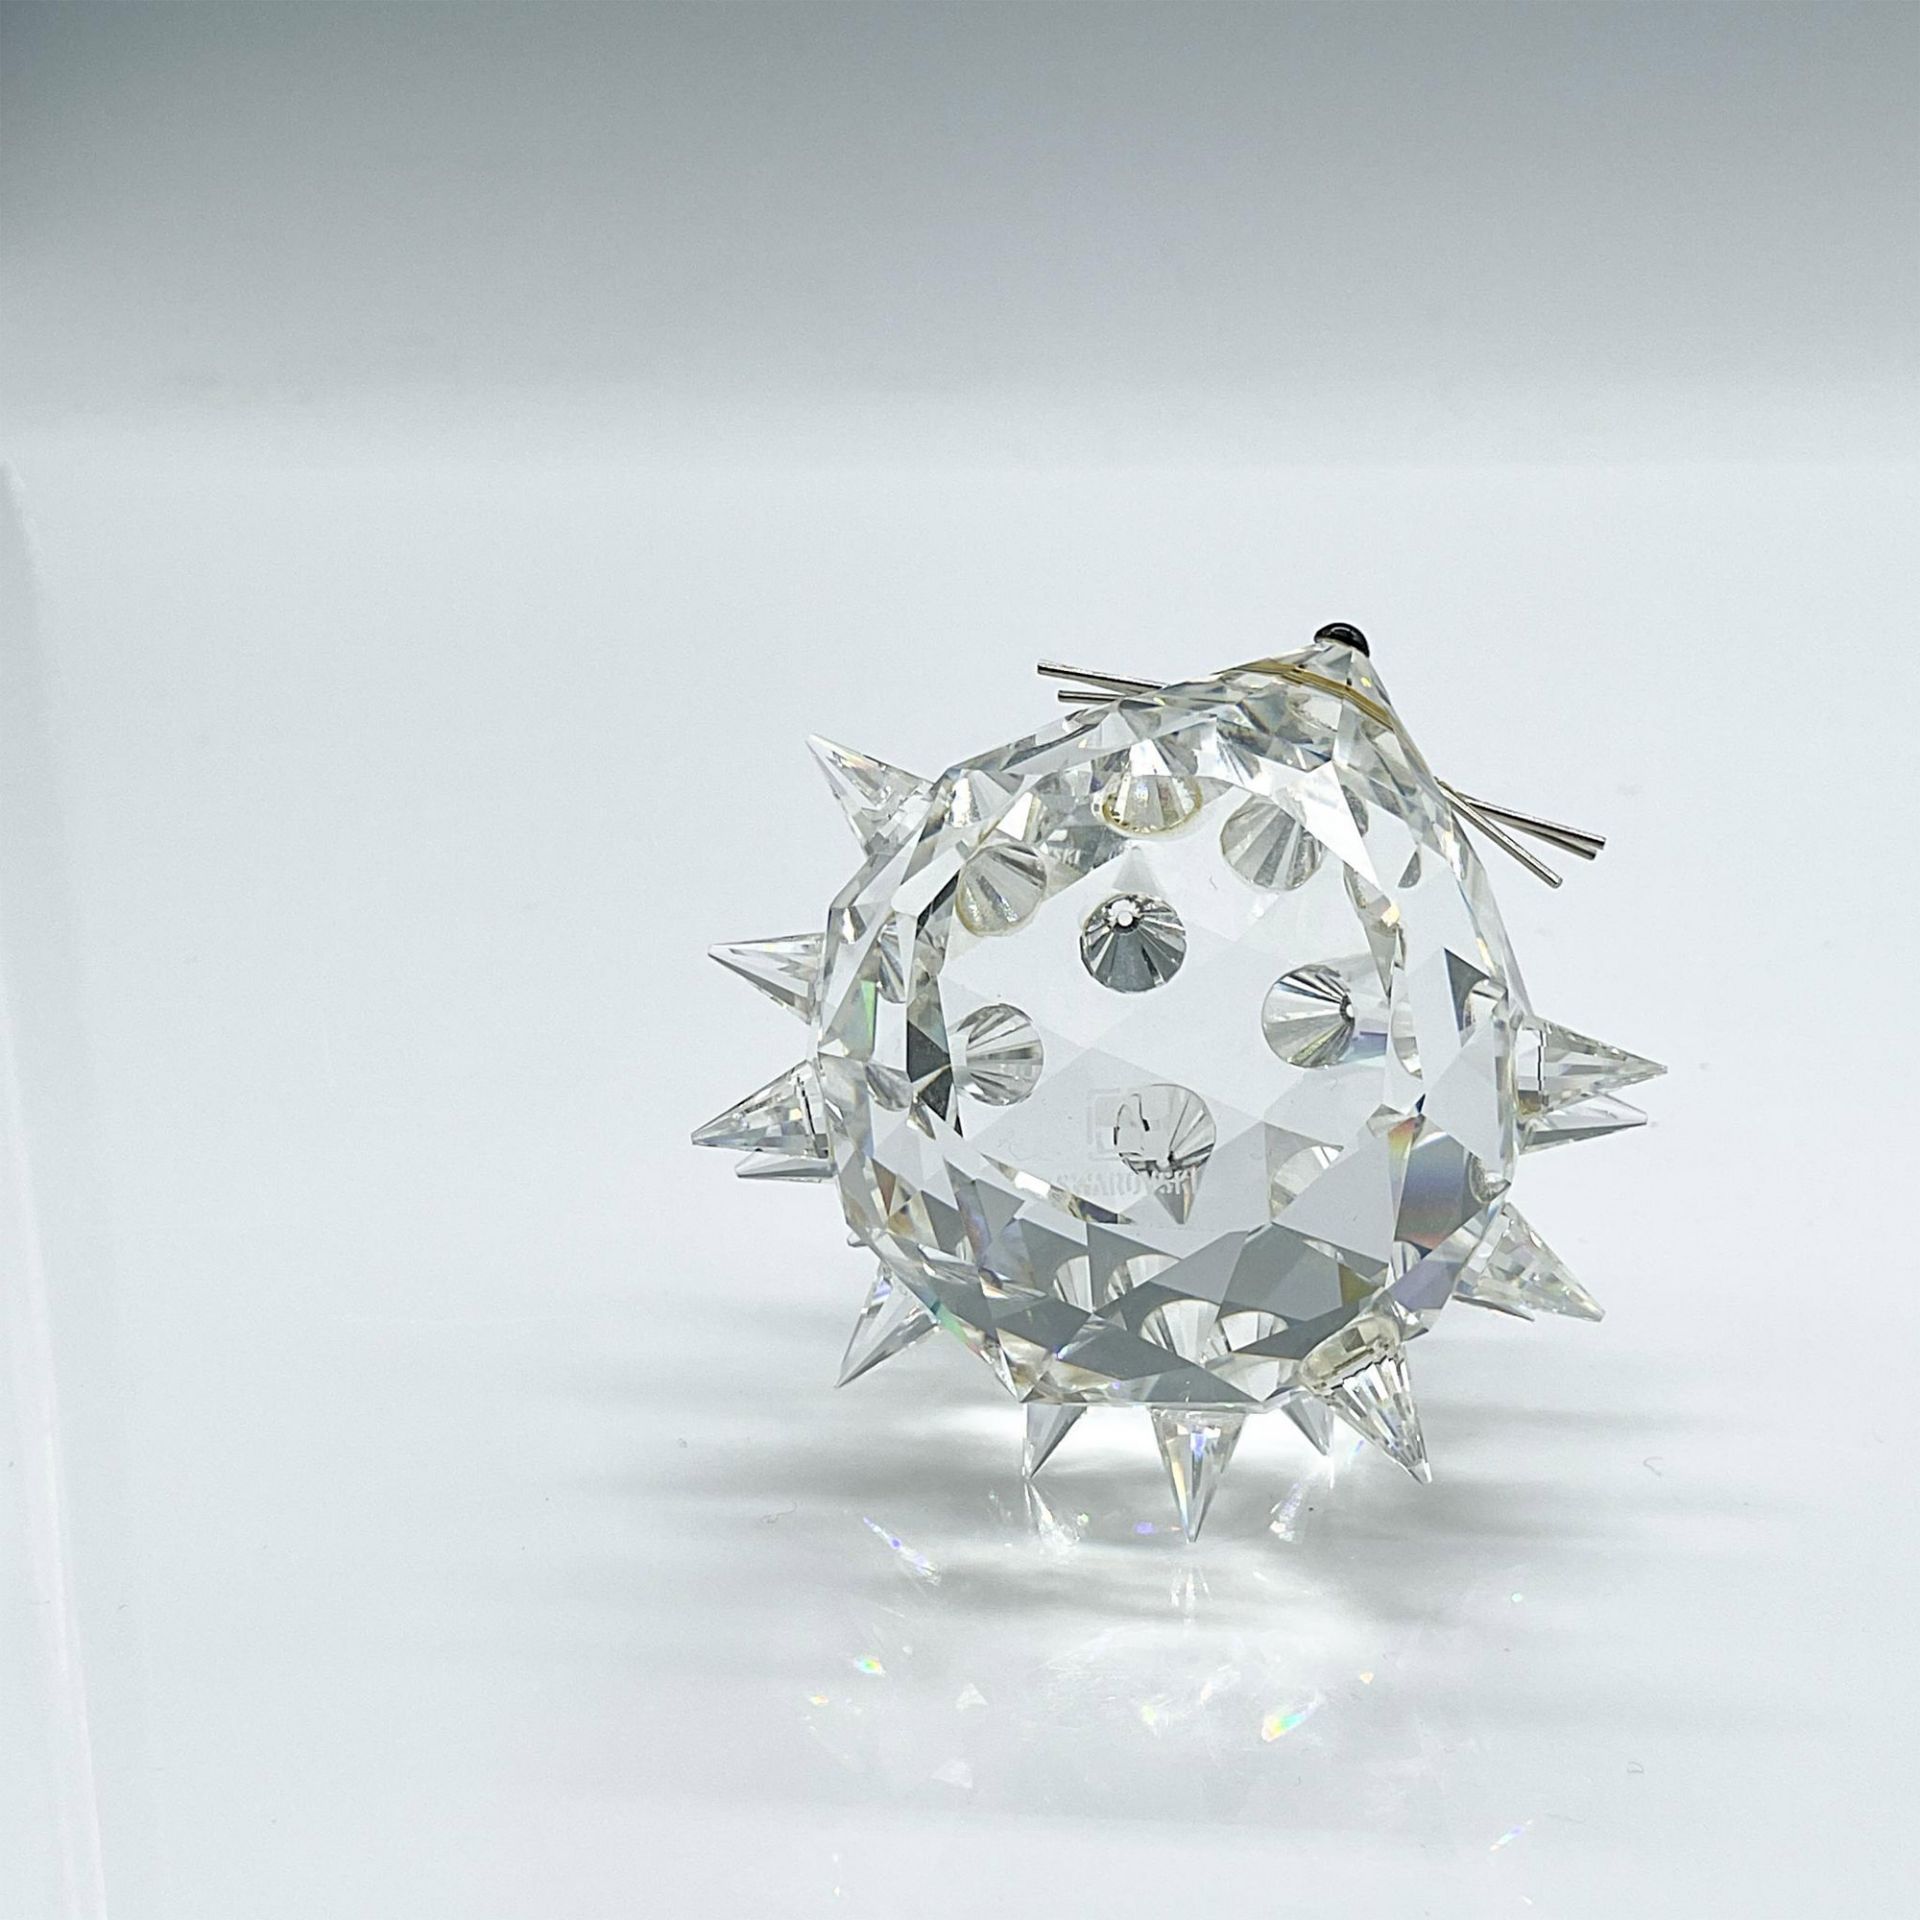 Swarovski Crystal Figurine, Hedgehog - Image 3 of 3